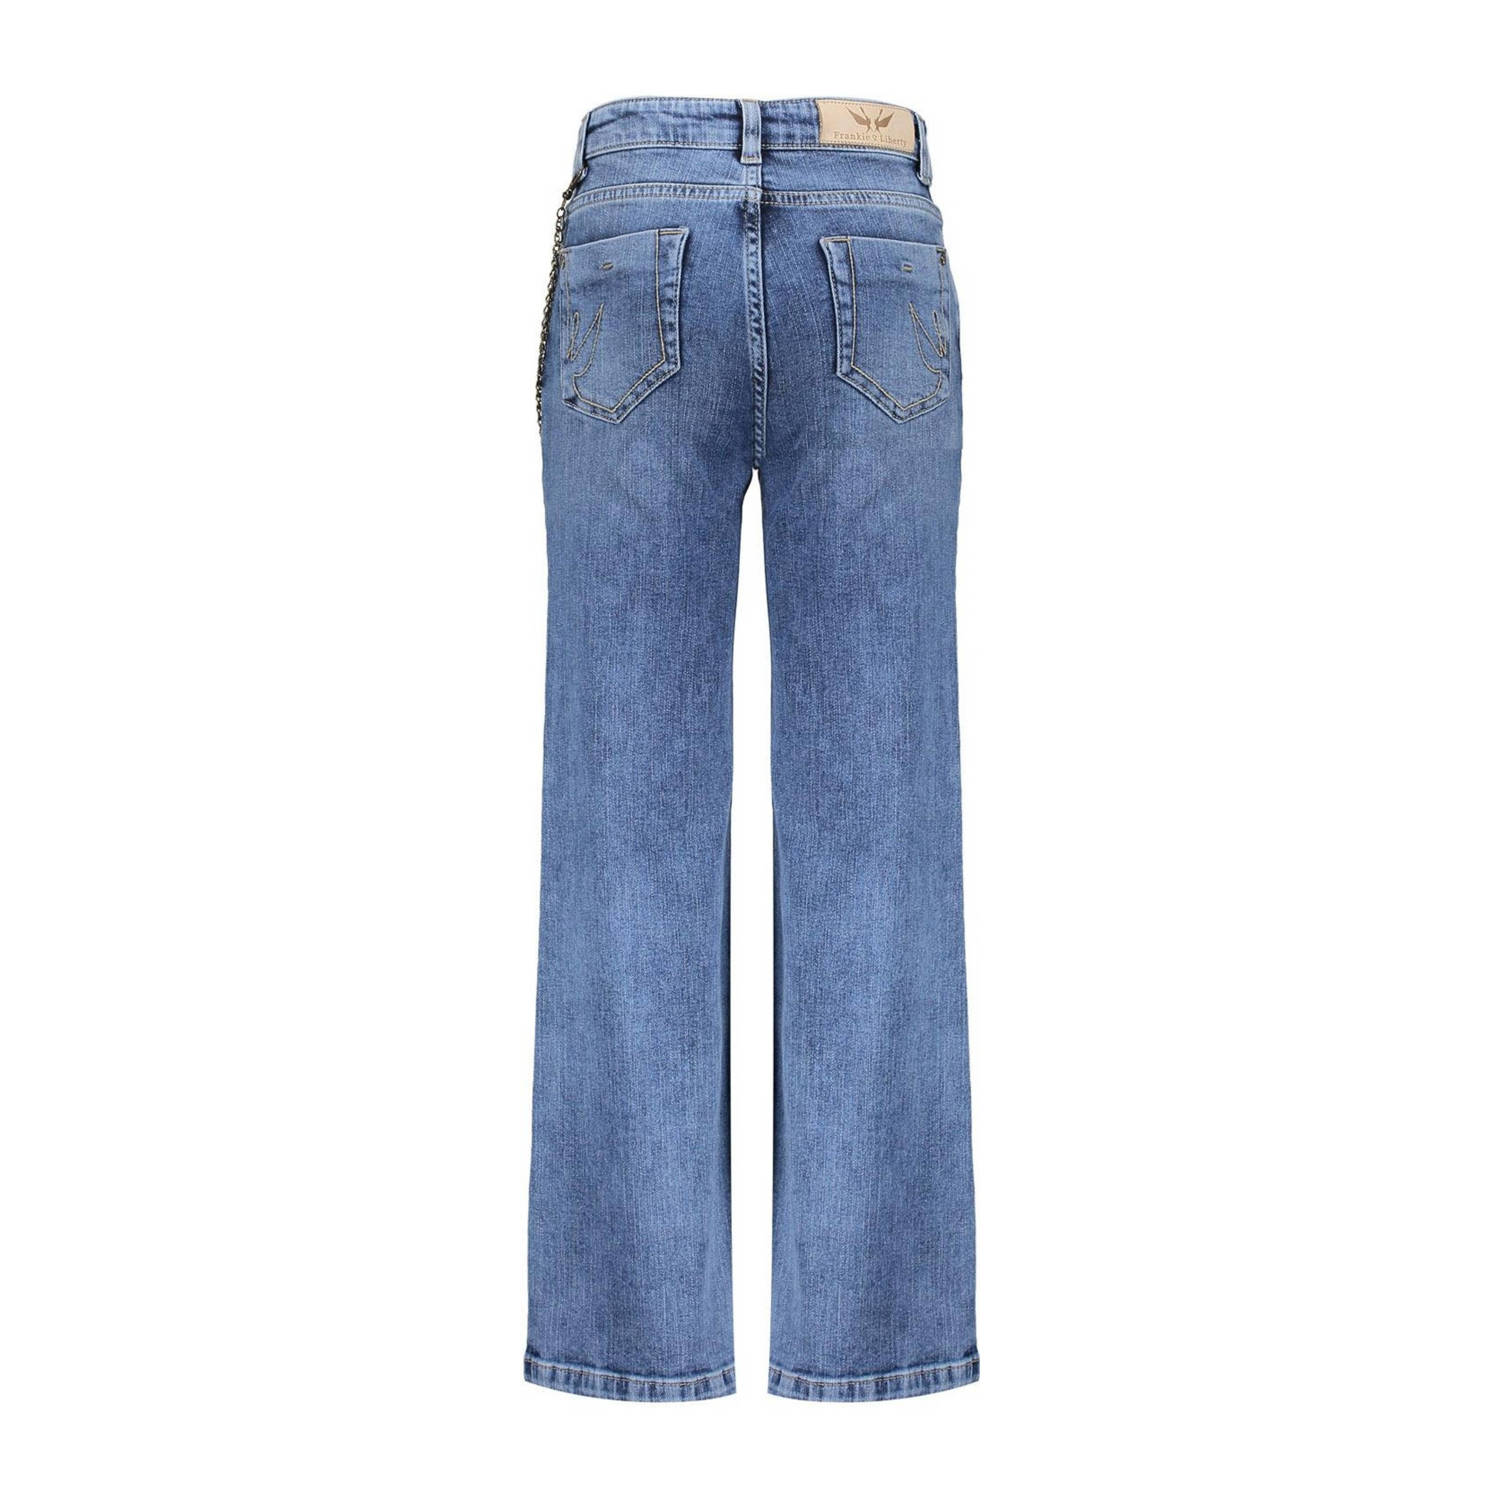 Frankie&Liberty wide leg jeans Attitude vintage blue denim